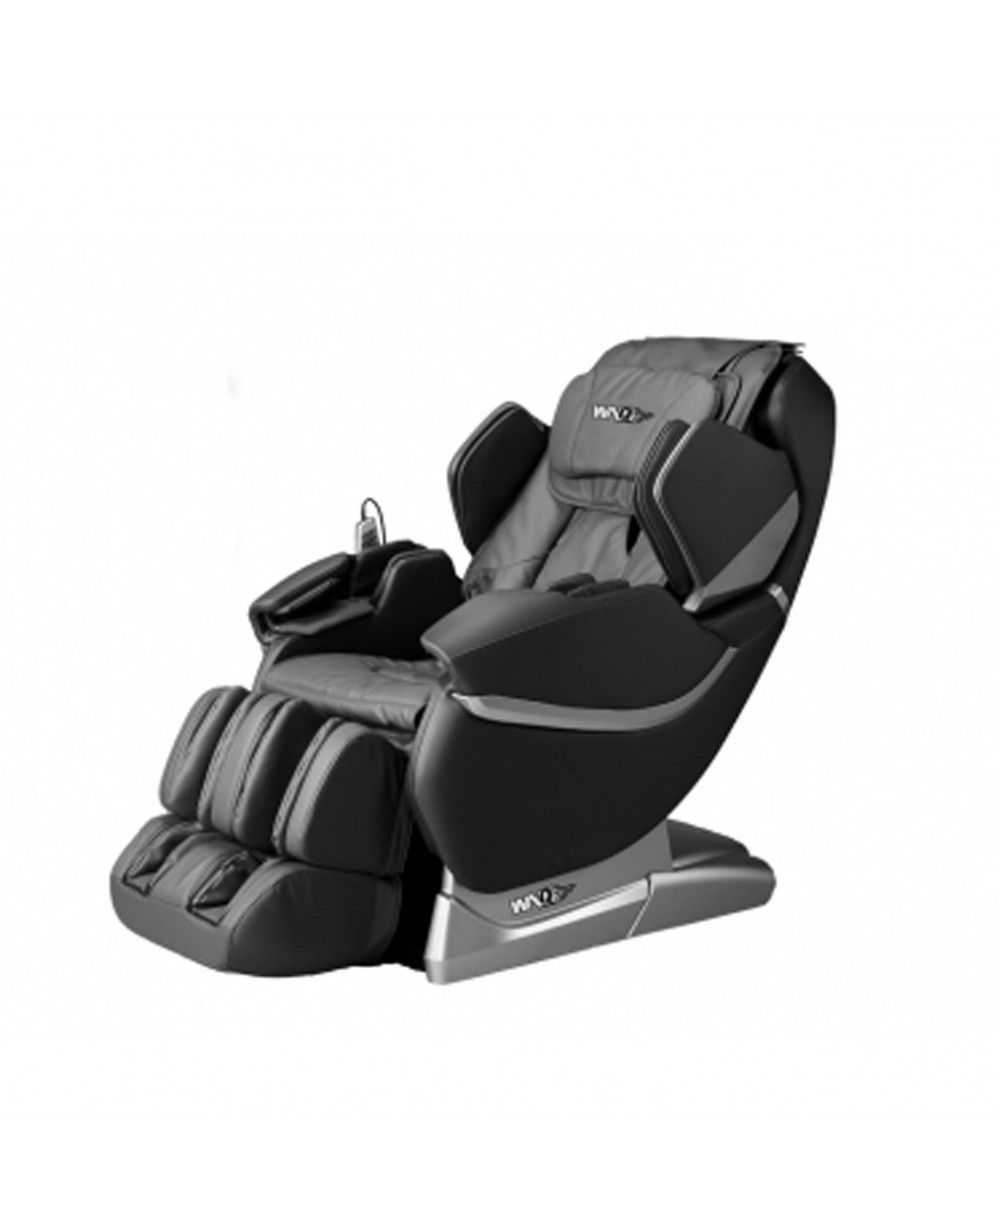 Massage Chair Price In Nepal Best Massage Chair In Nepal